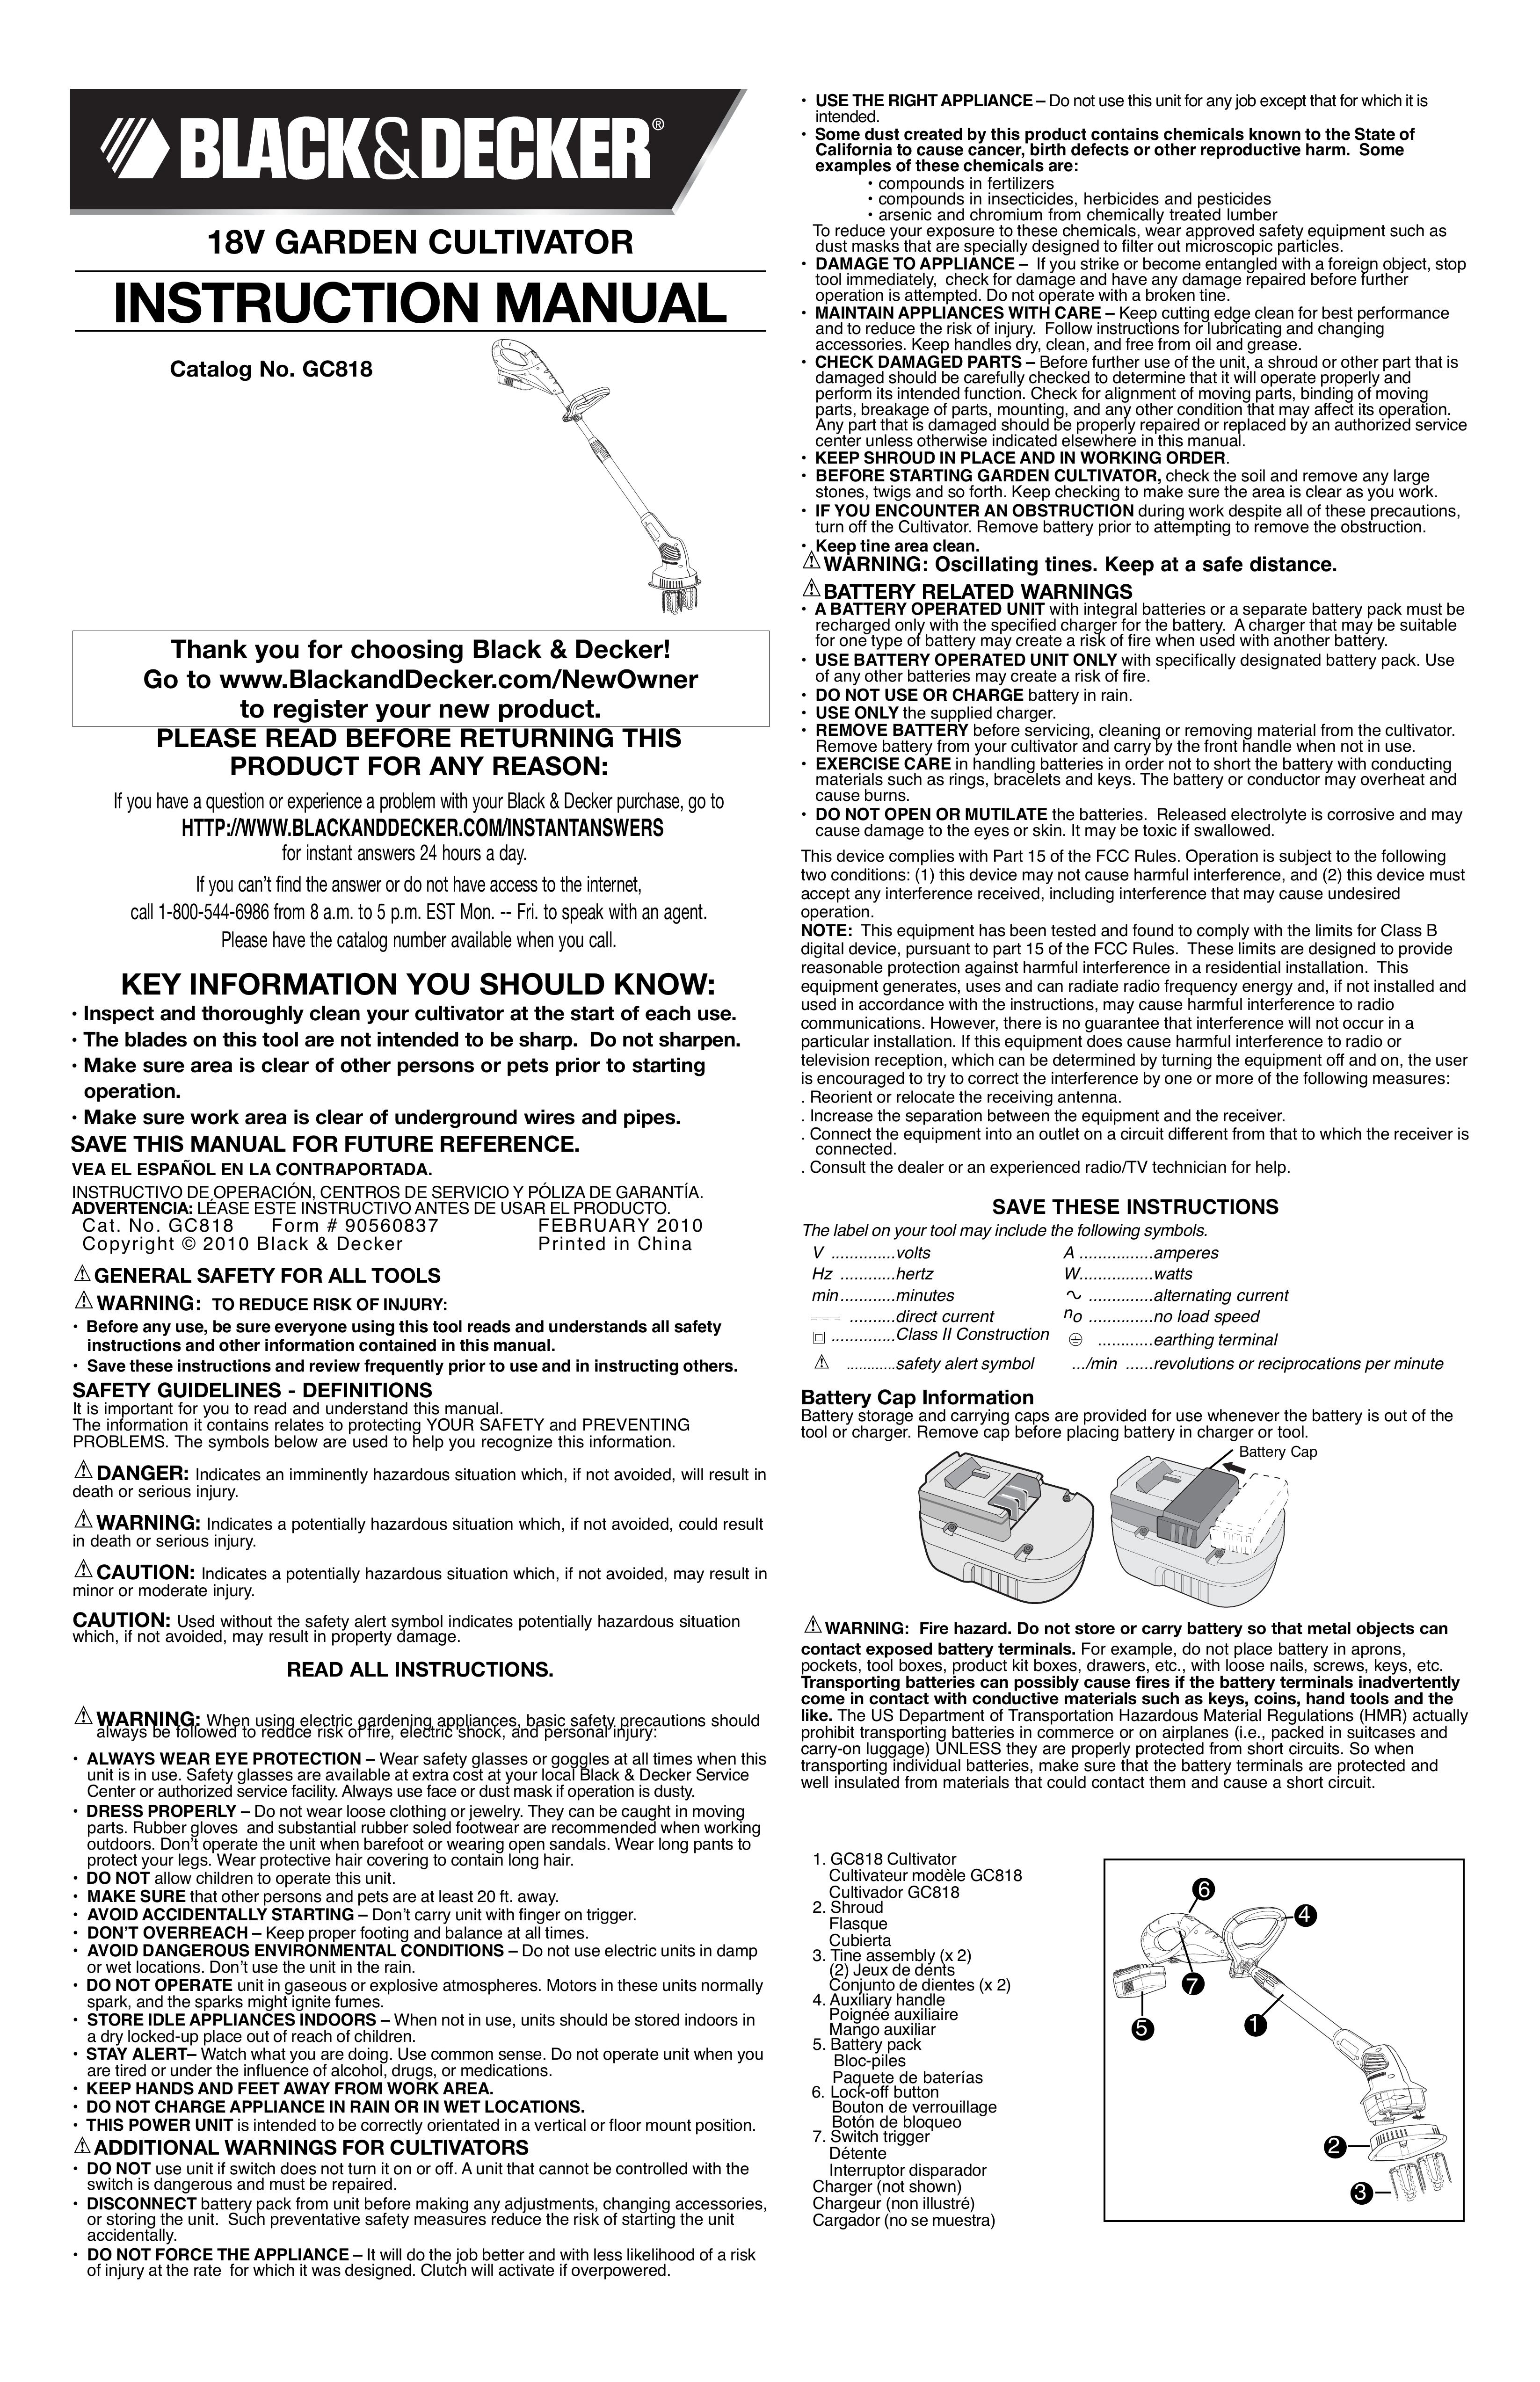 Black & Decker GC818R Cultivator User Manual